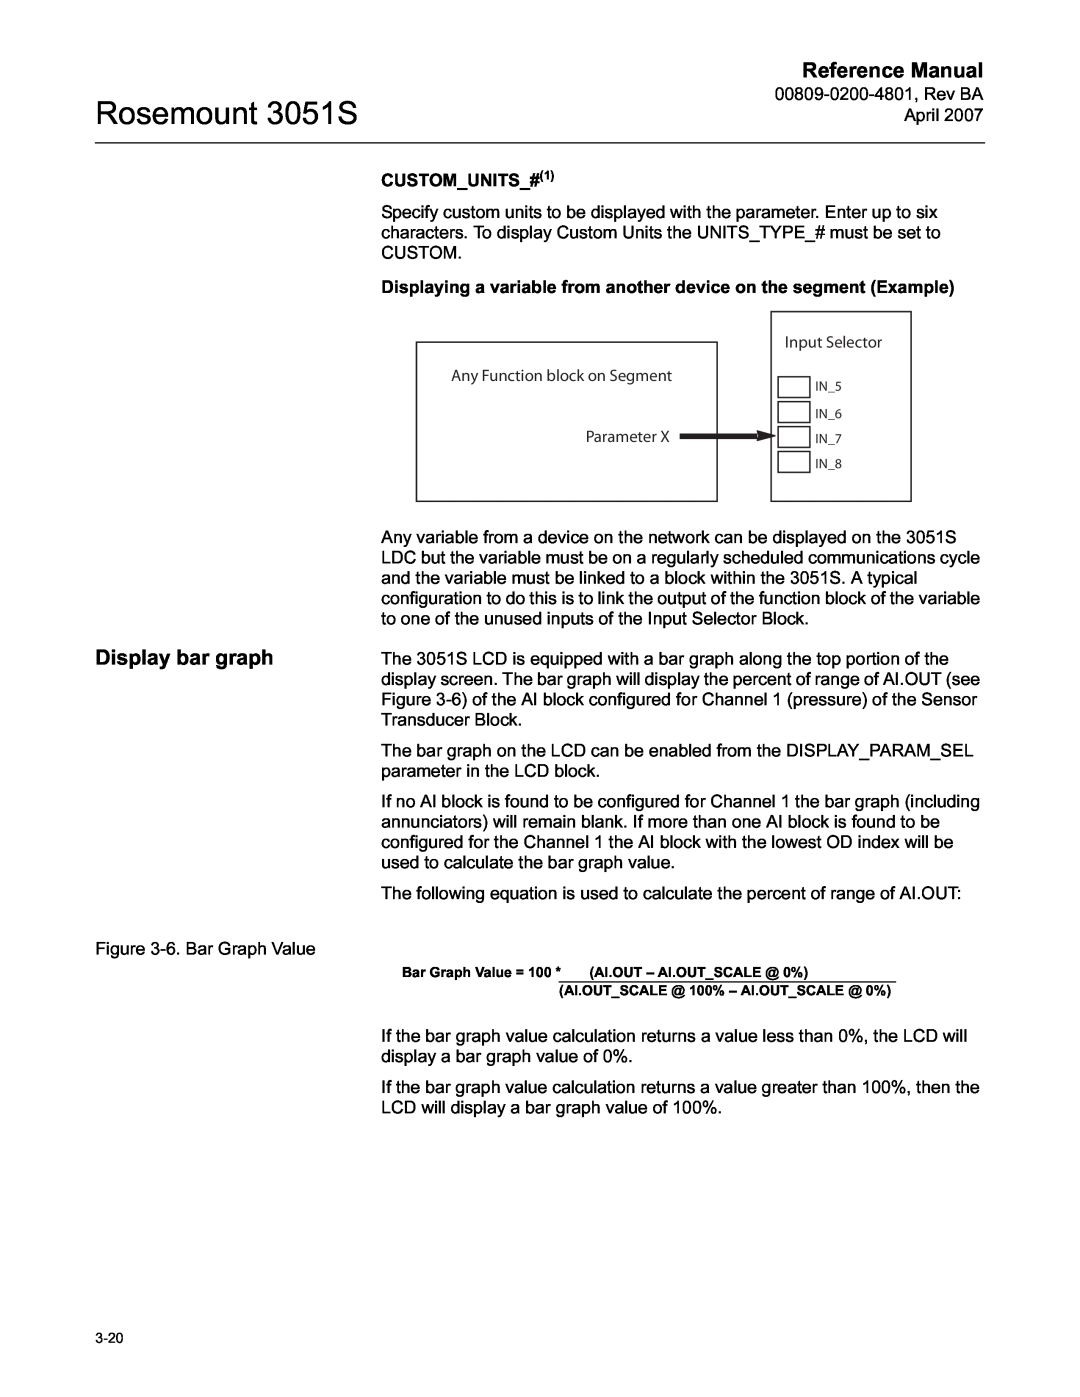 Emerson manual Display bar graph, Rosemount 3051S, Reference Manual, Parameter, Input Selector 